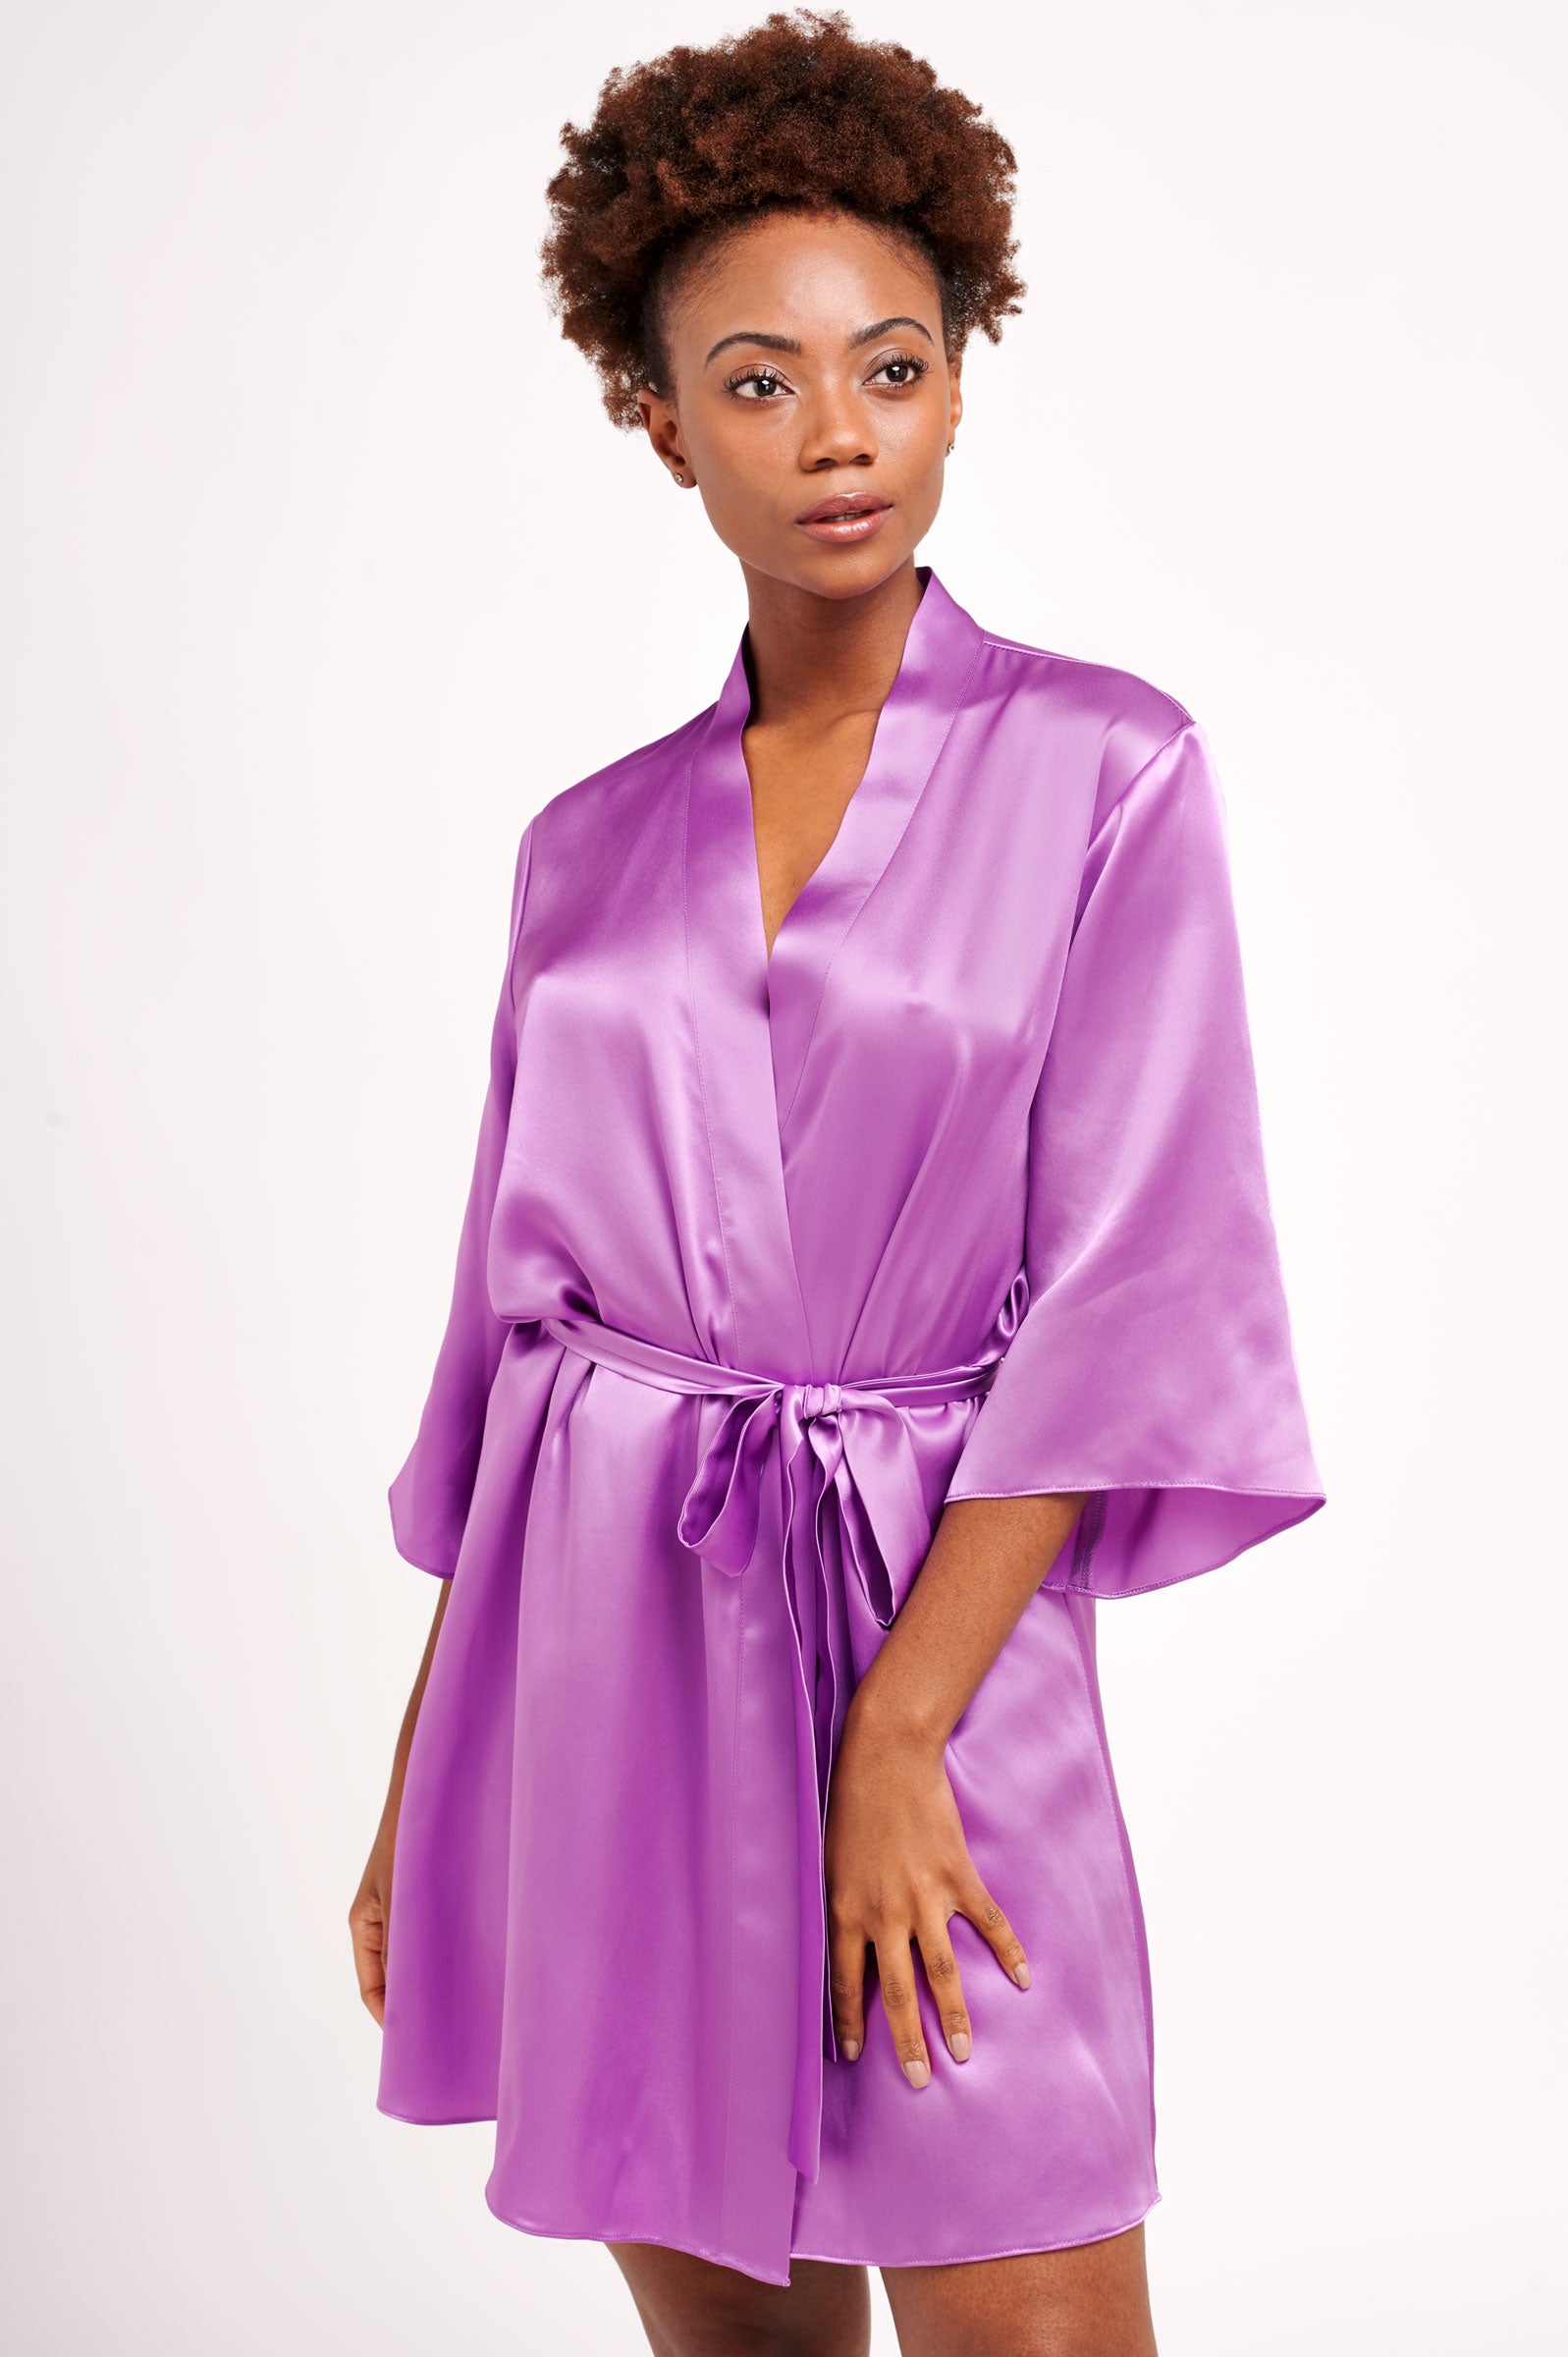 Violet purple robe in 100% silk satin